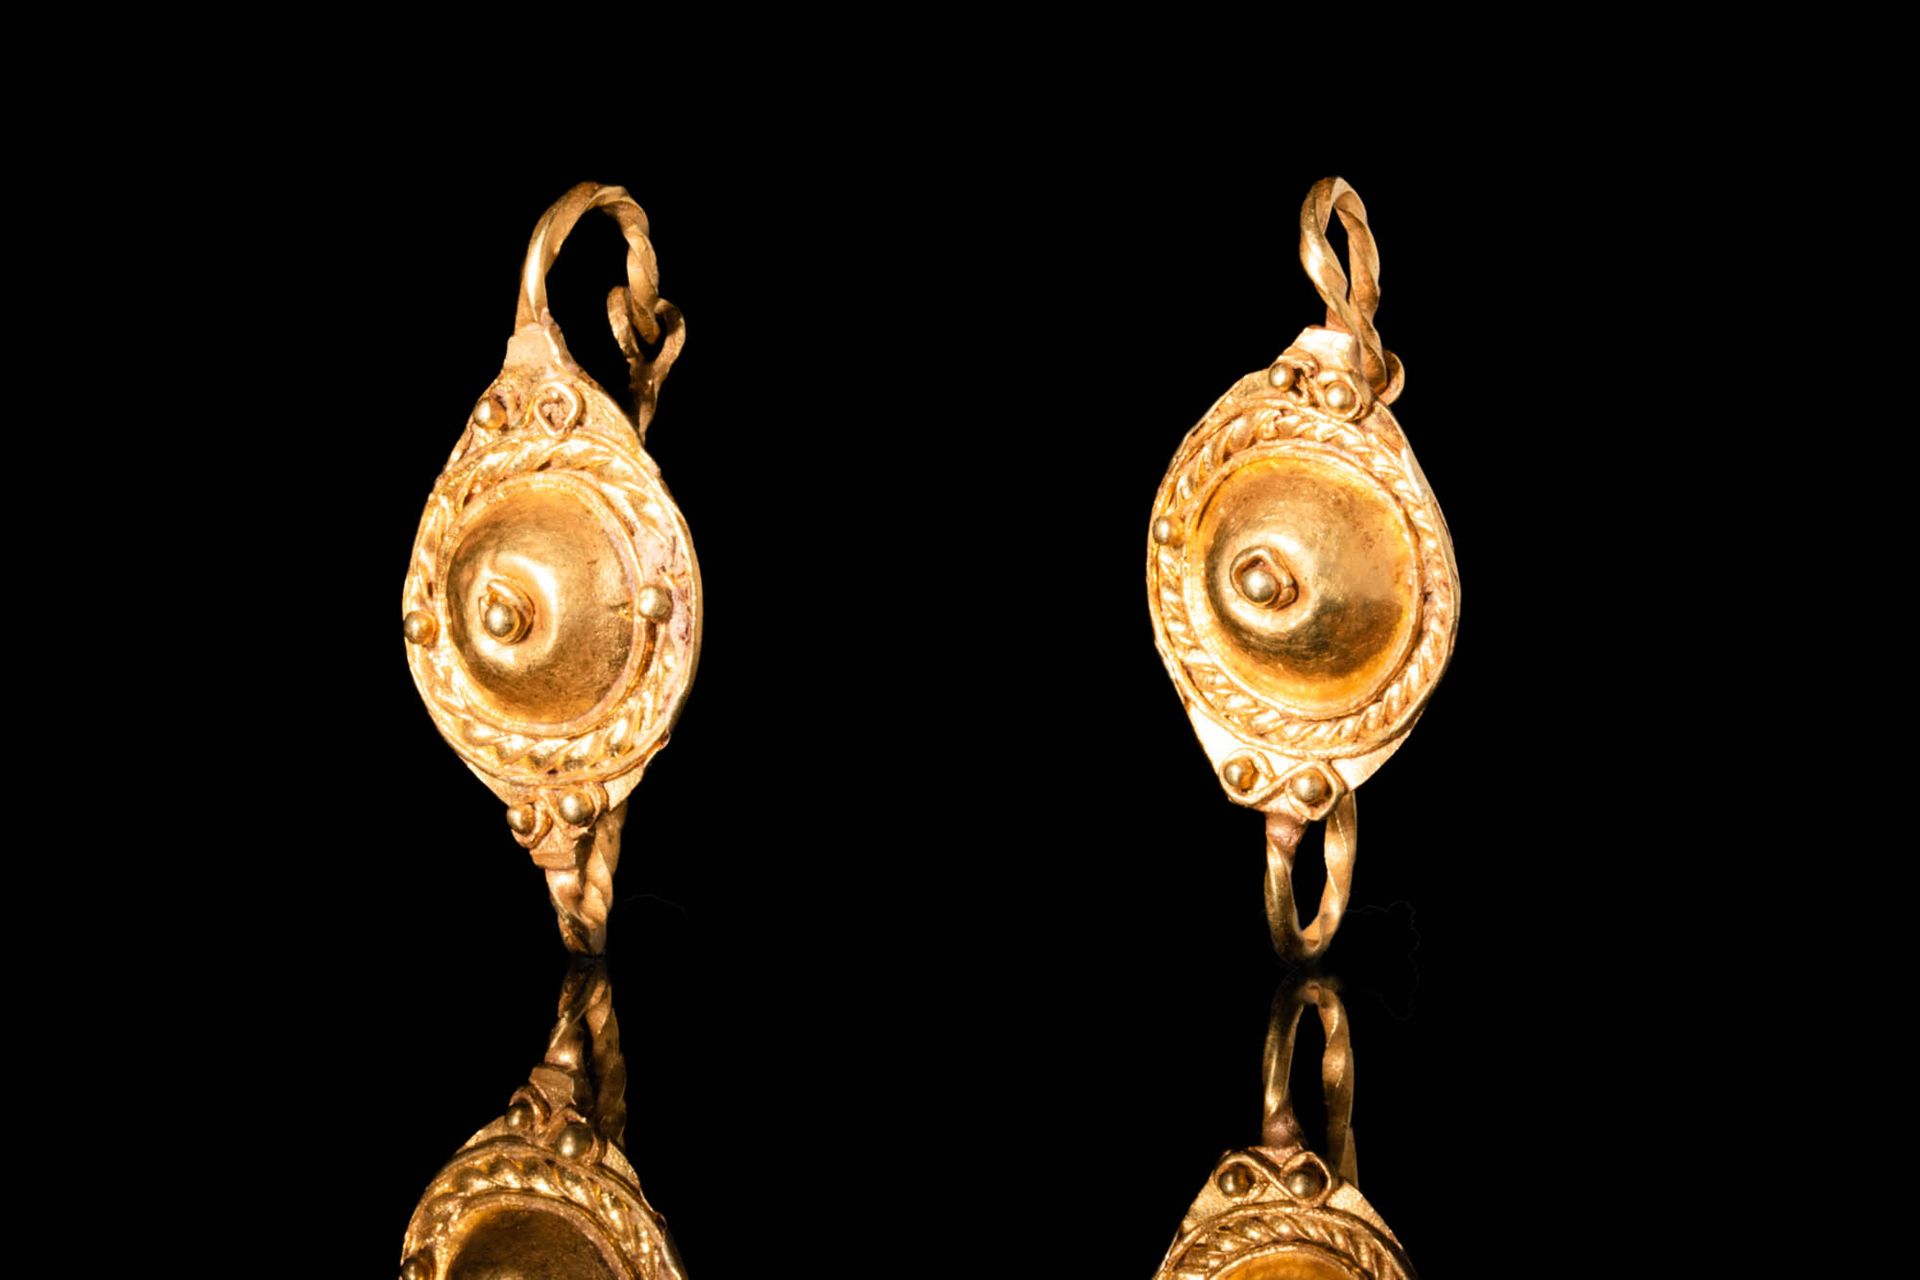 ROMAN GOLD UMBO SHAPE EARRINGS Ca. 200 - 300 N. CHR.
Ein Paar römische Goldohrri&hellip;